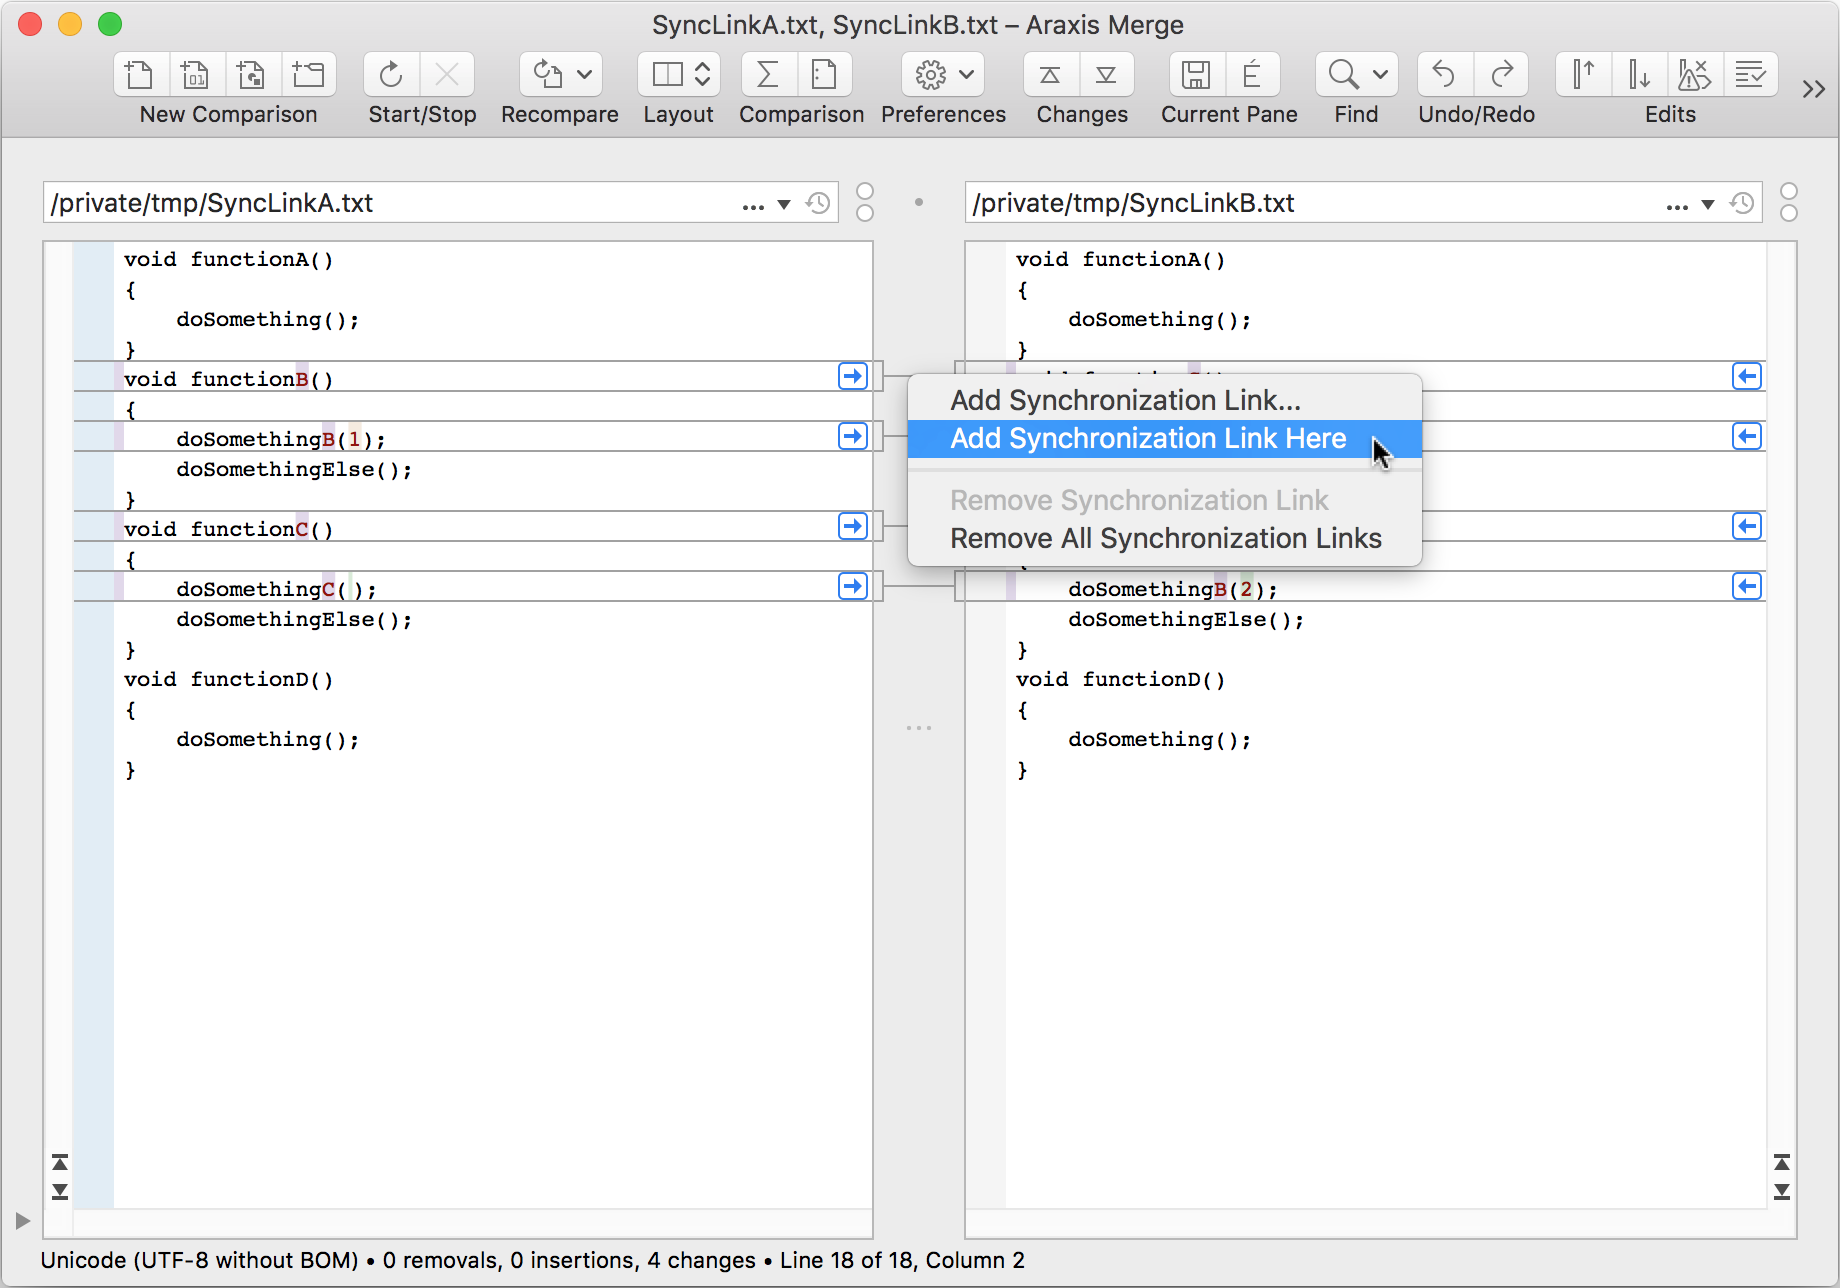 Partial screenshot showing synchronization links context menu